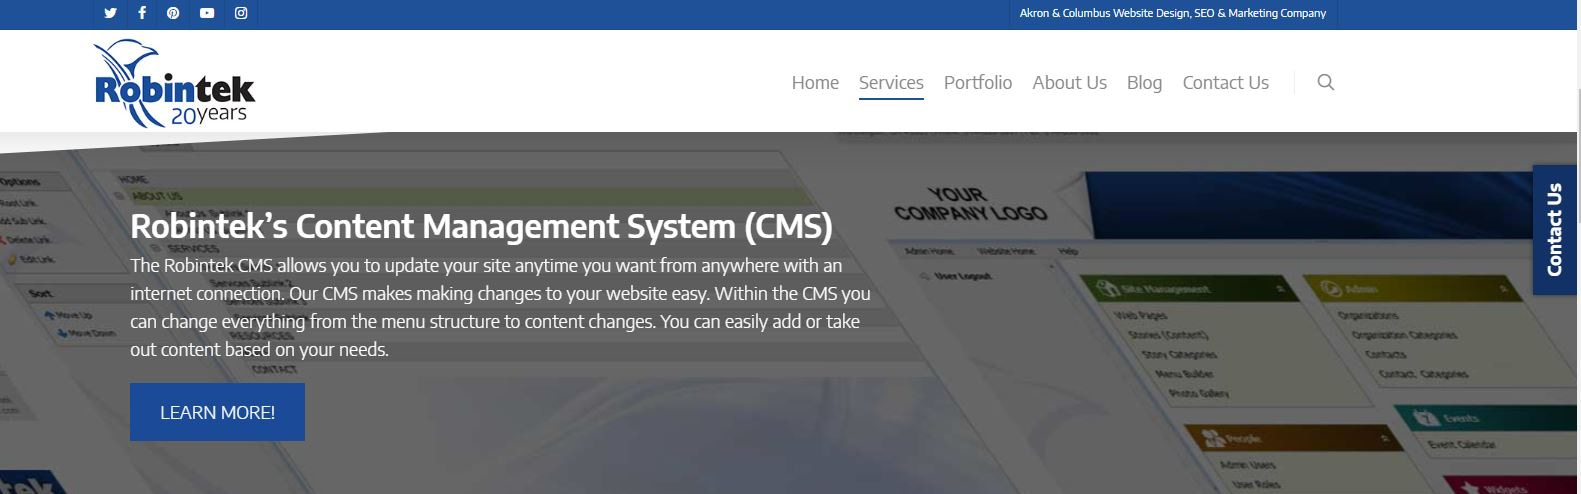 robintek content management system CMS